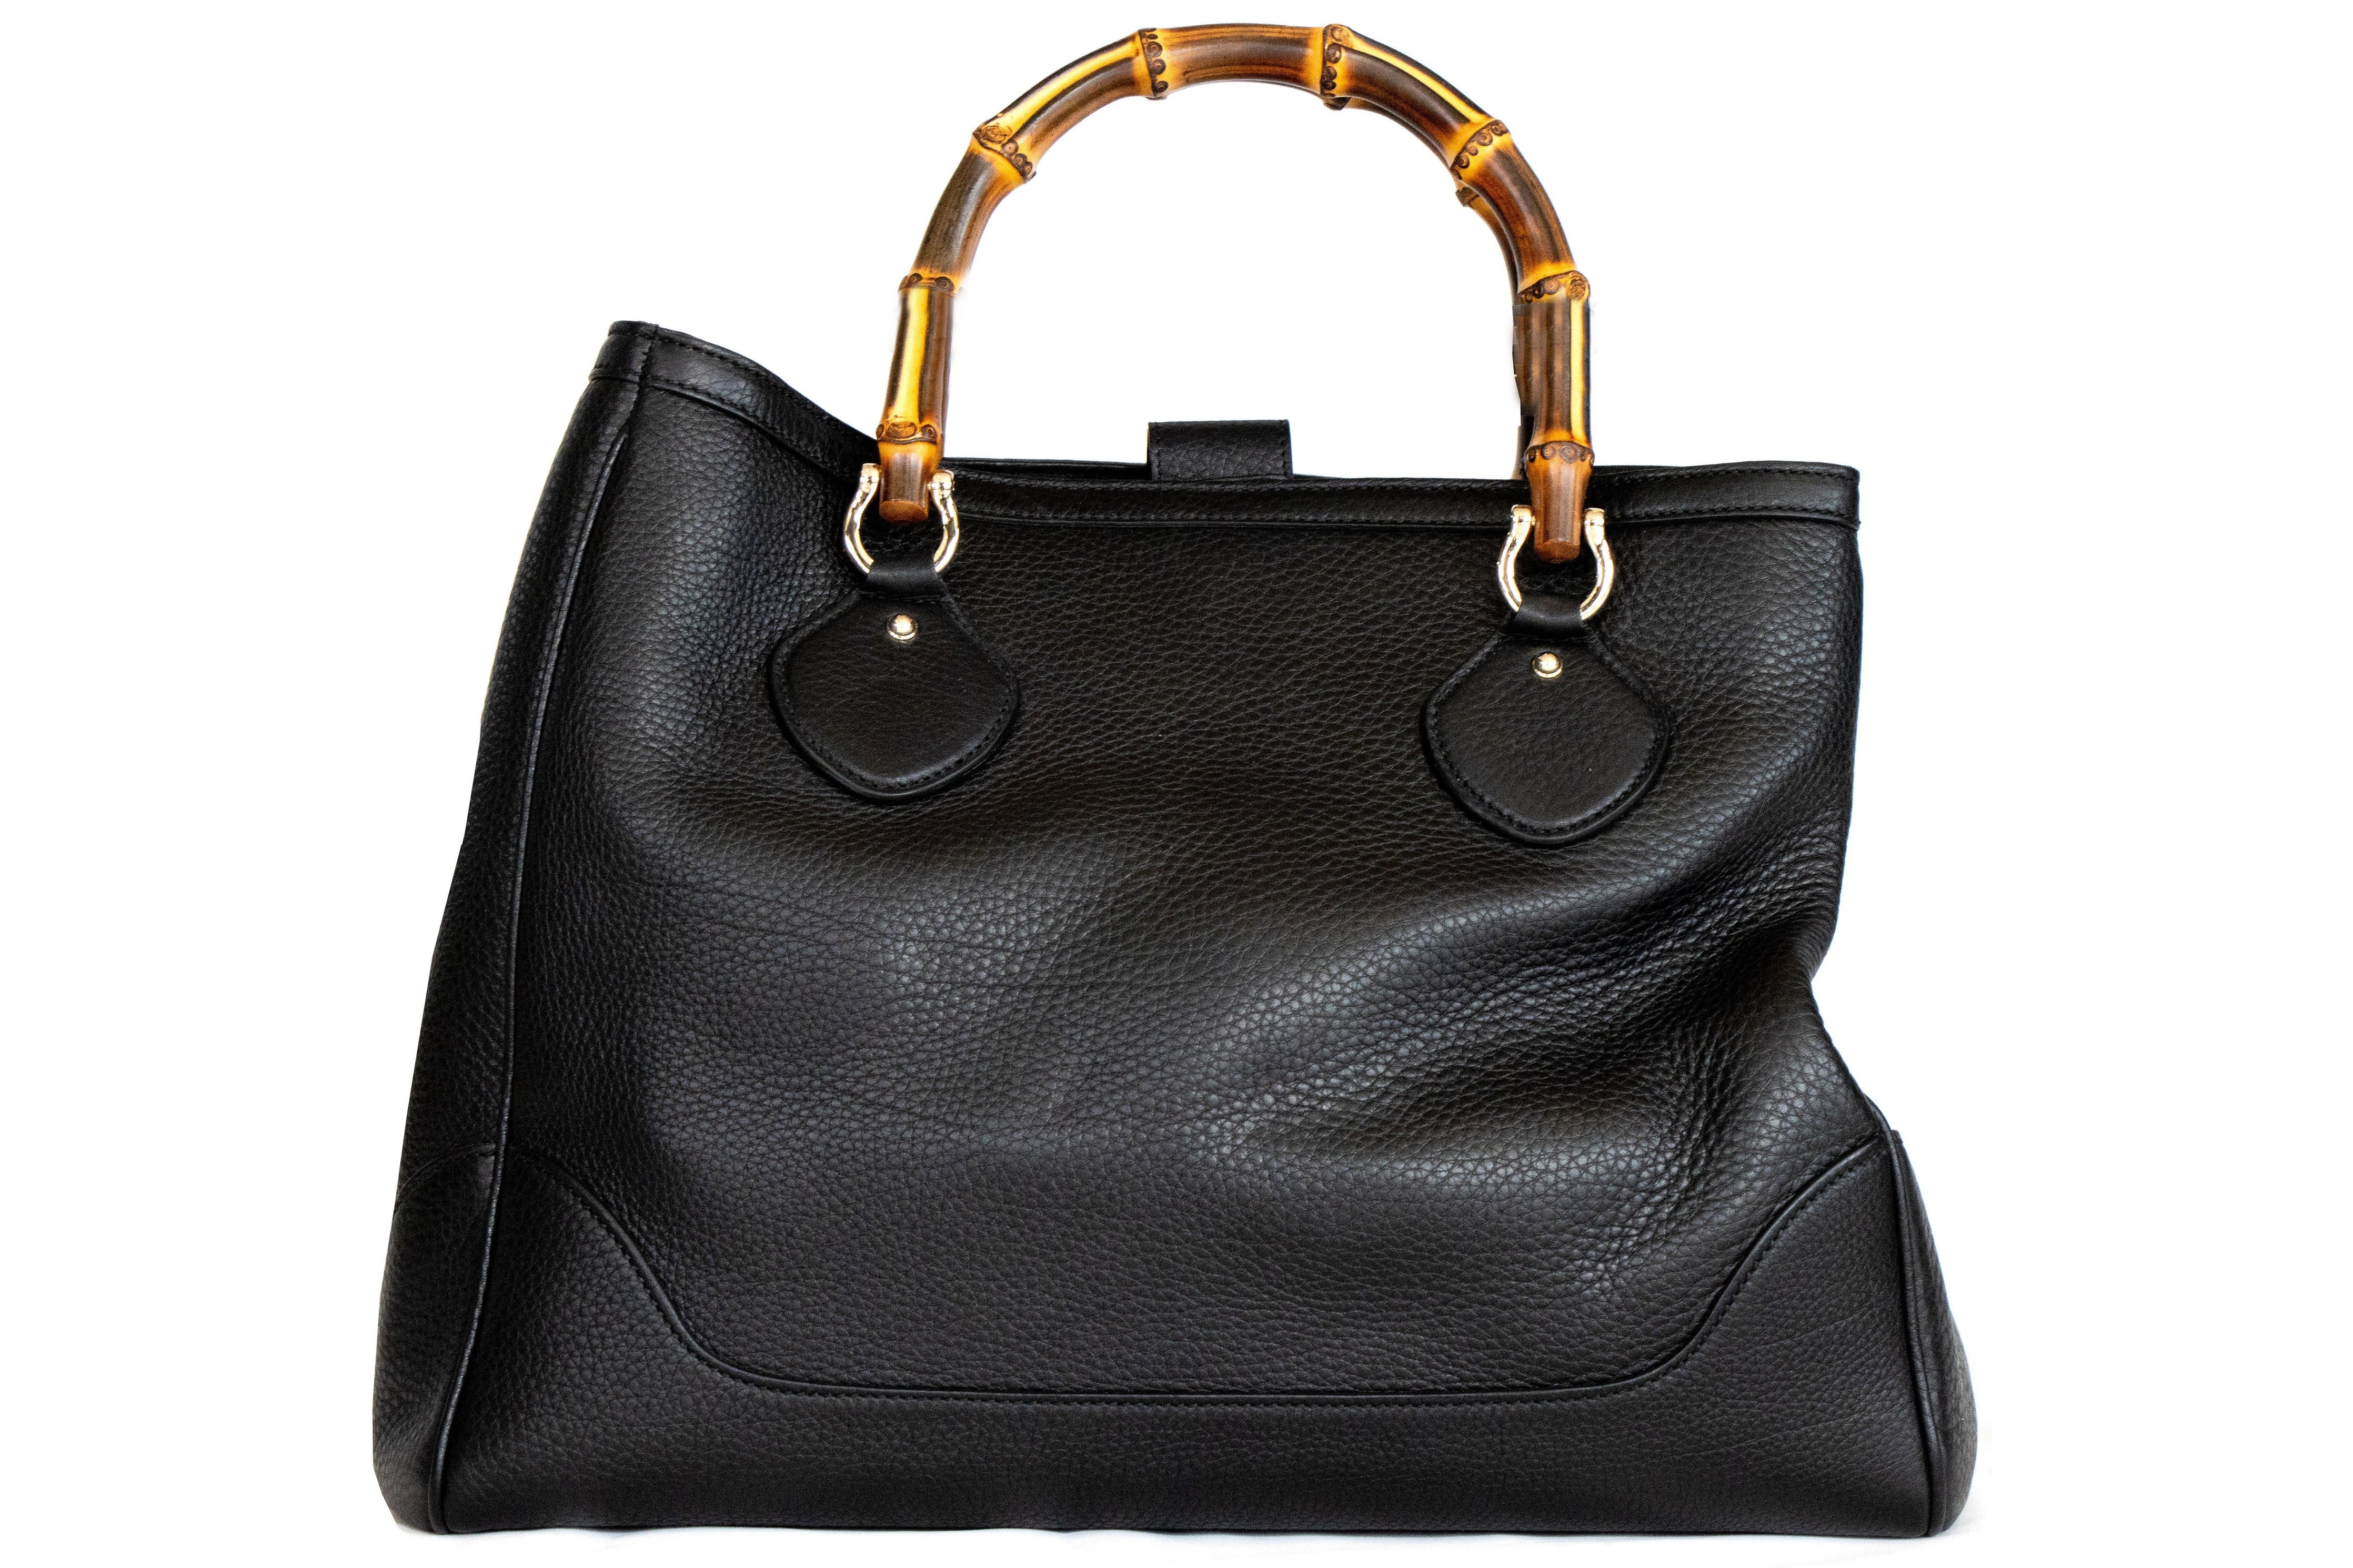 Gucci Diana Bamboo Medium Tote Bag in Black